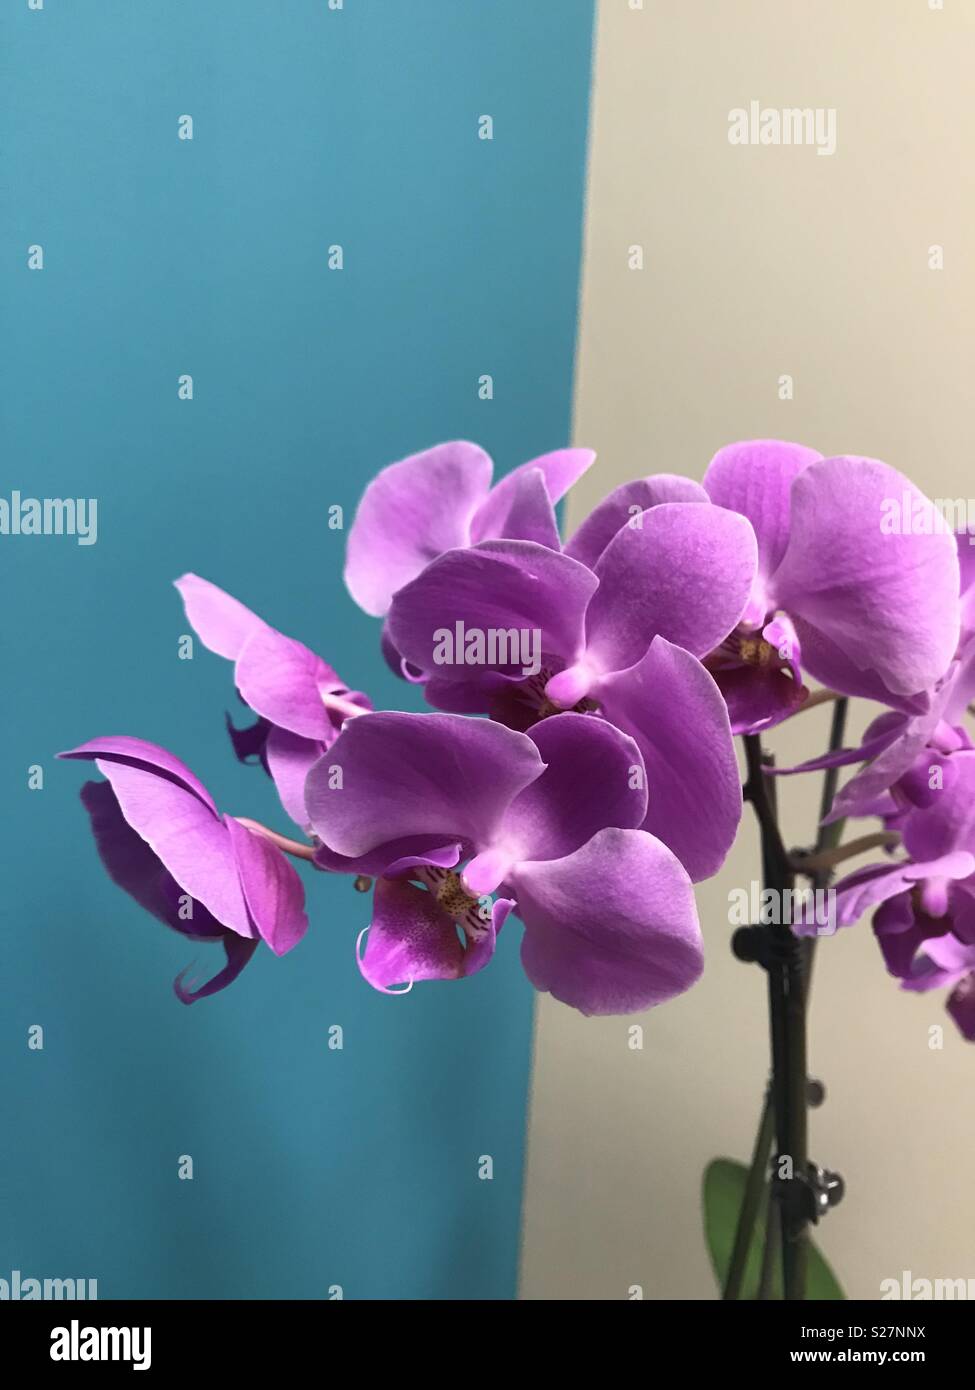 Rosa lila Orchidee blüht gegen eine türkise Wand Stockfotografie - Alamy